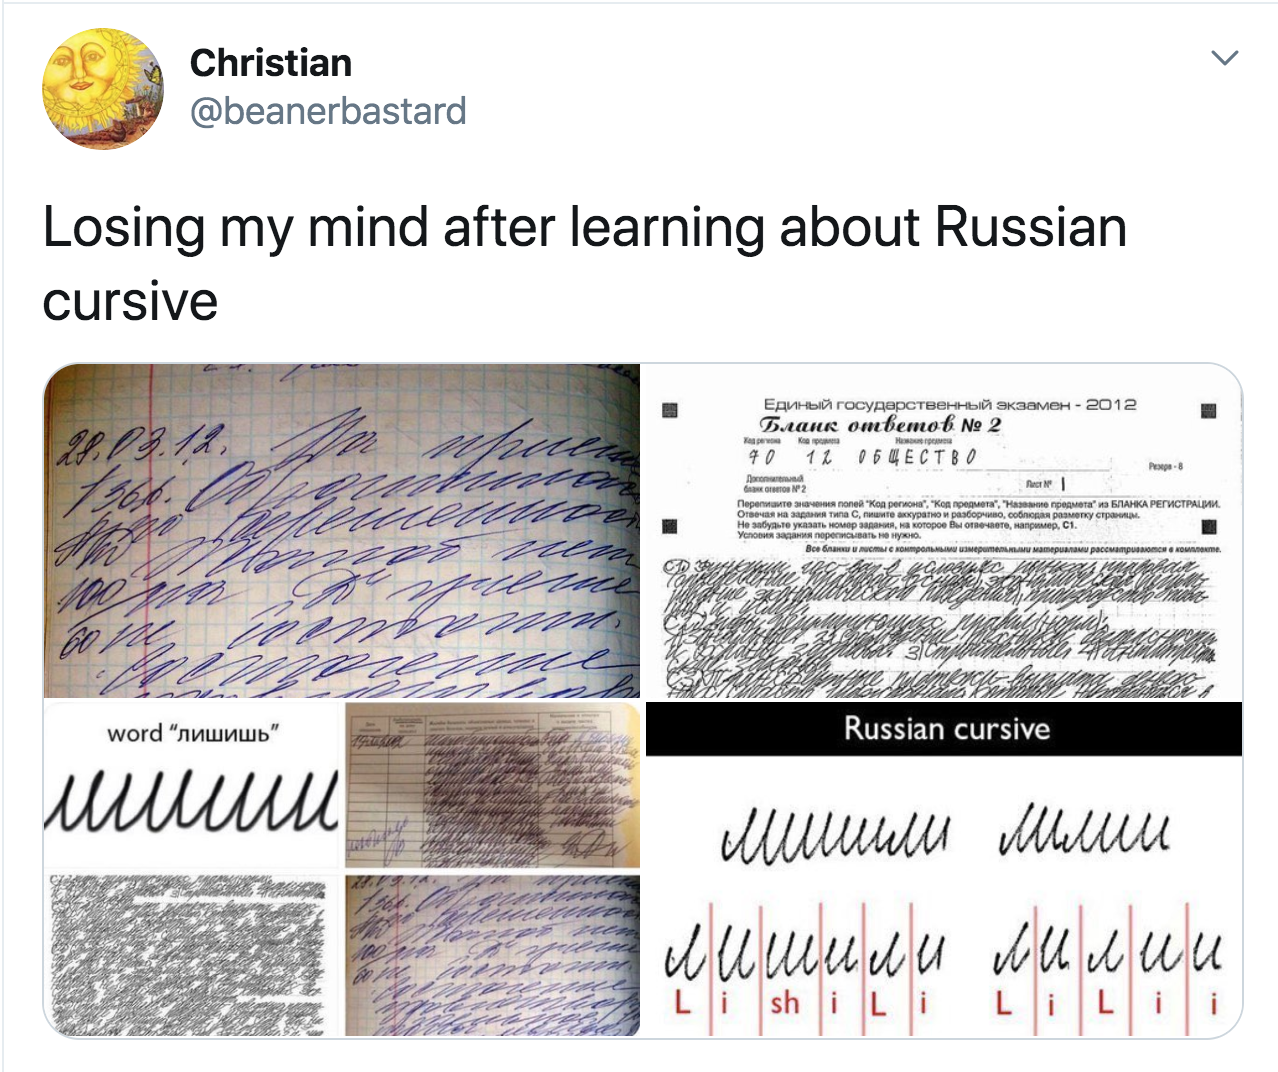 Christian Losing my mind after learning about Russian cursive . 2012 2 10 12 16 Lectra | 1. word "" Russian cursive Li shi Li Li Lii